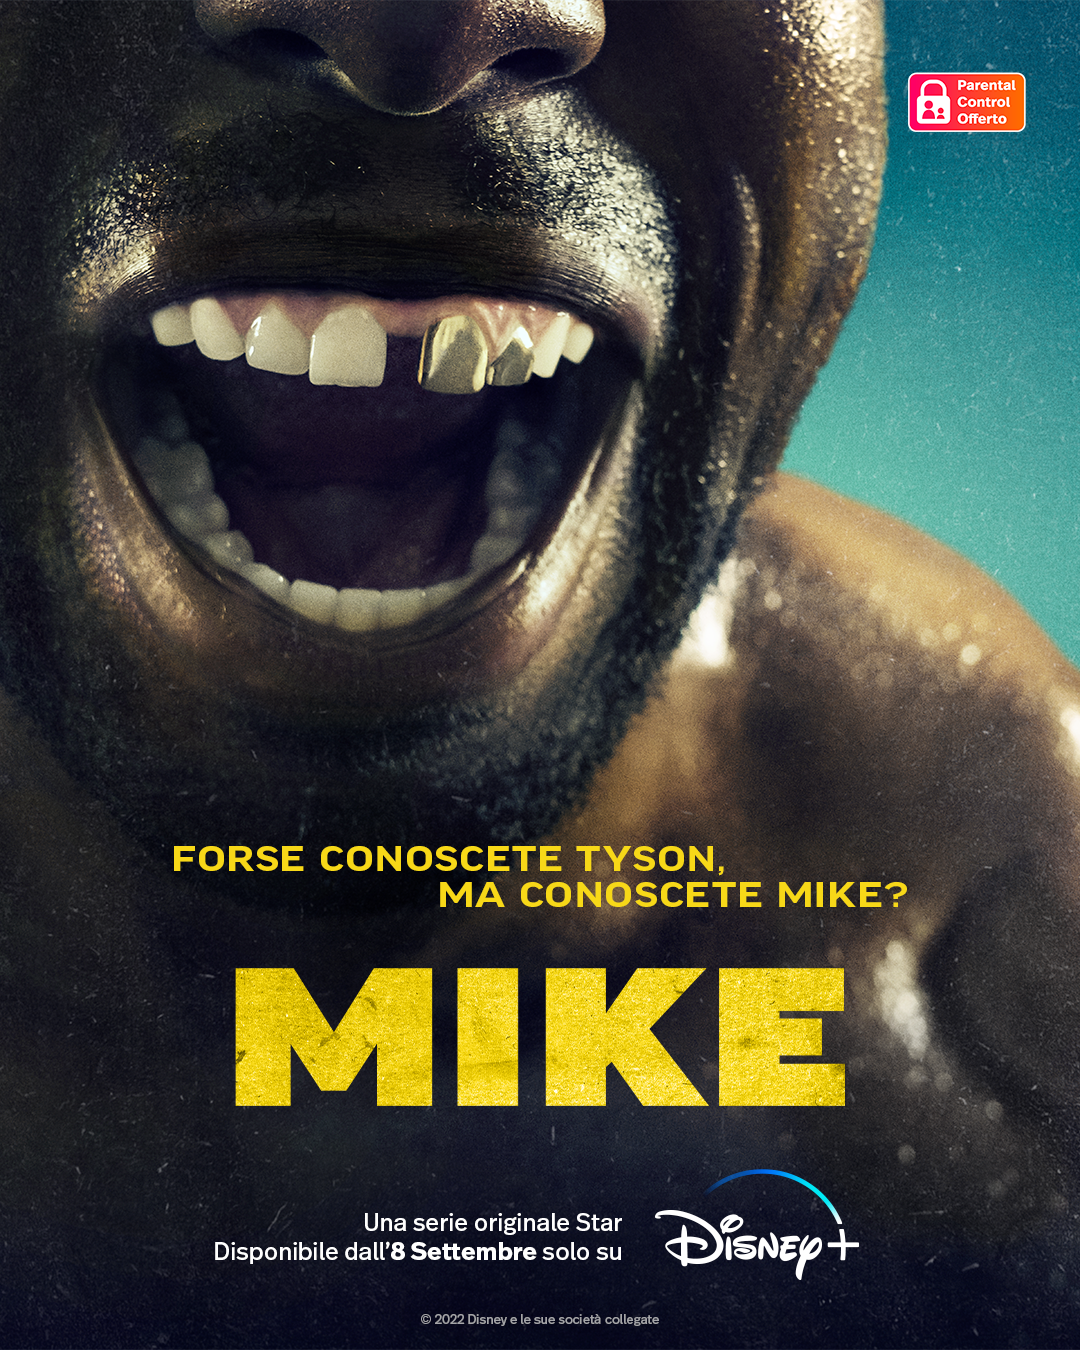 Mike Tyson's face